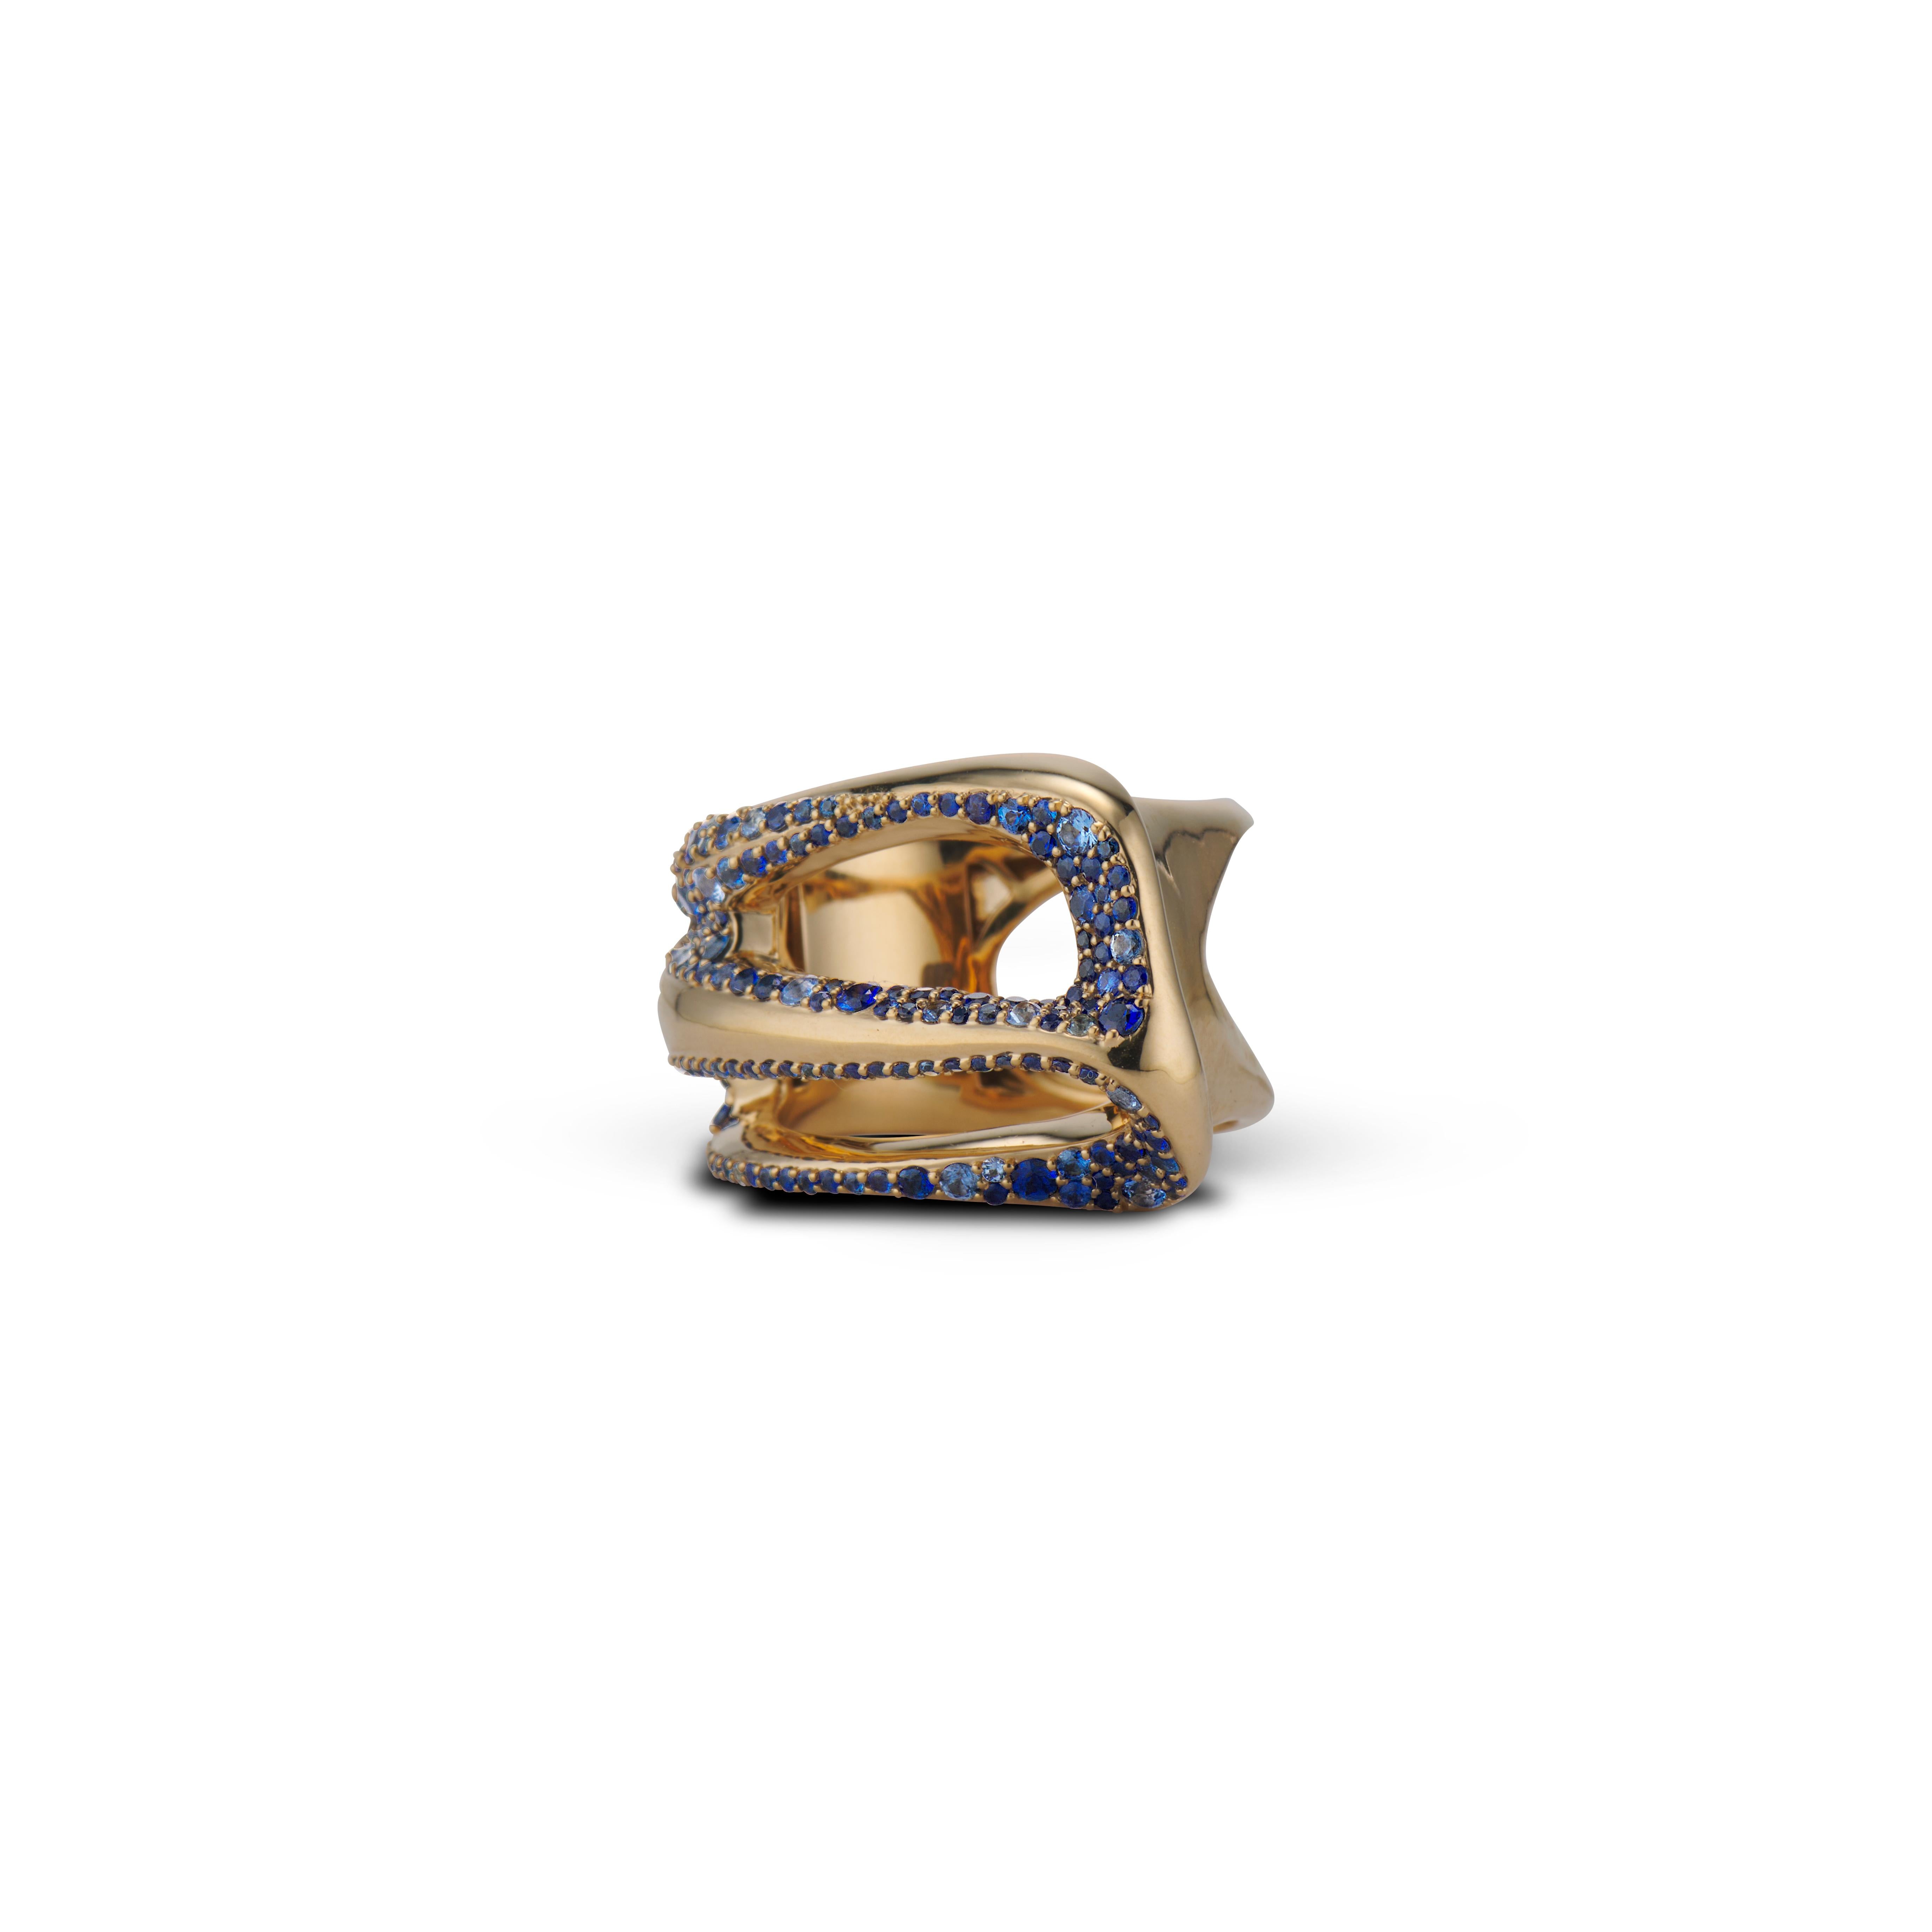 JV Insardi 18 Karat Gold Sculptural Ring with White Diamonds 5